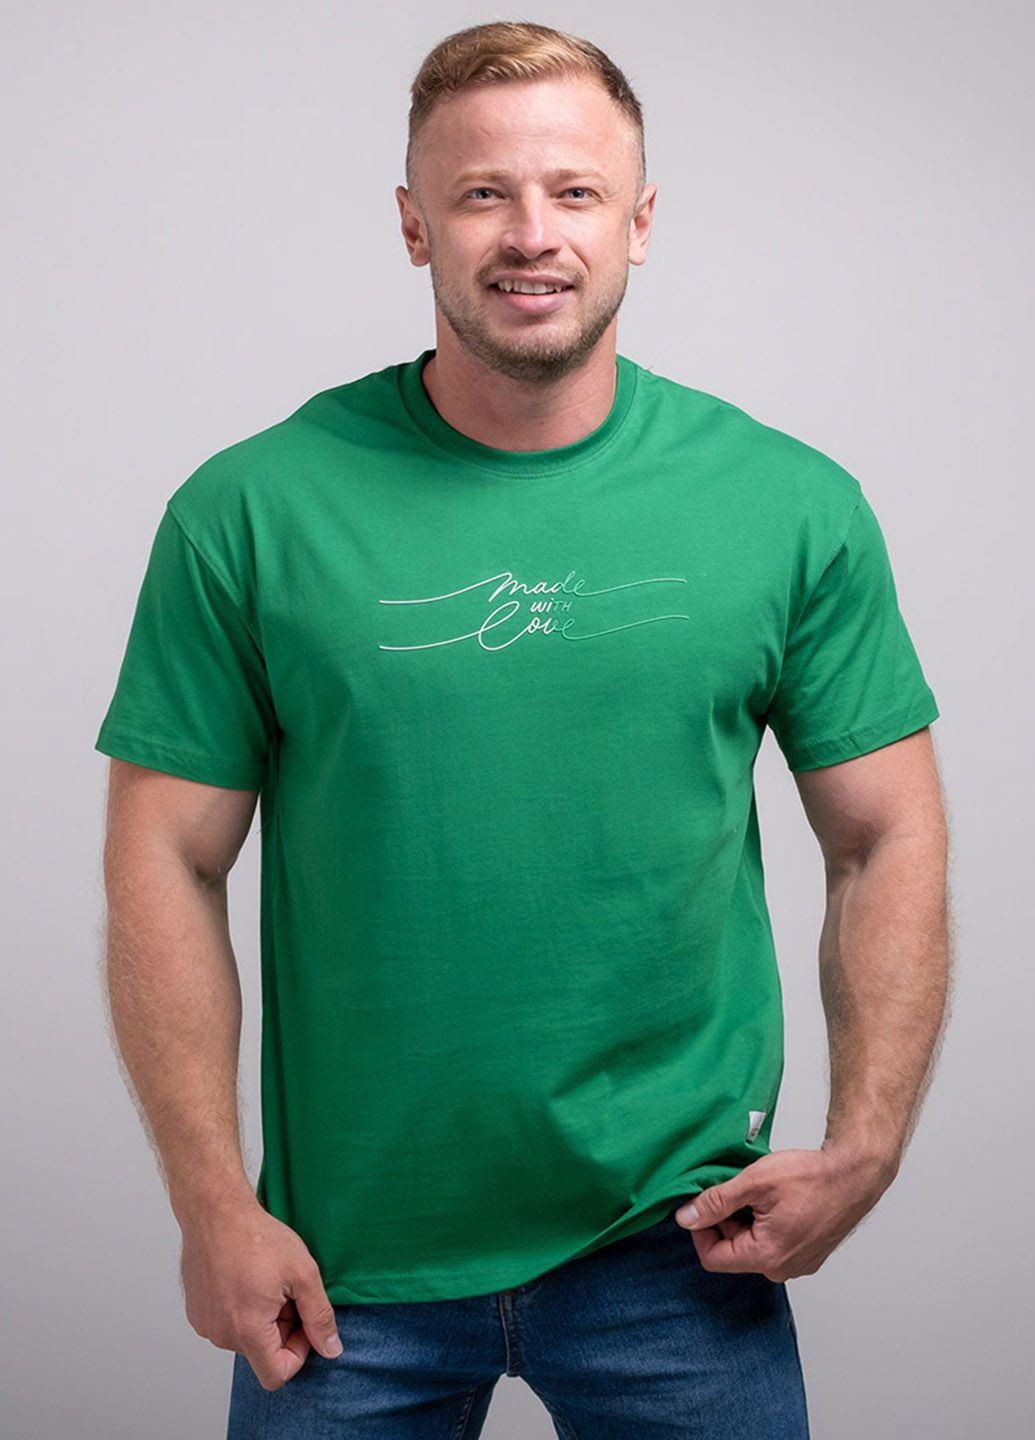 Зелена футболка чоловіча 340702 Power